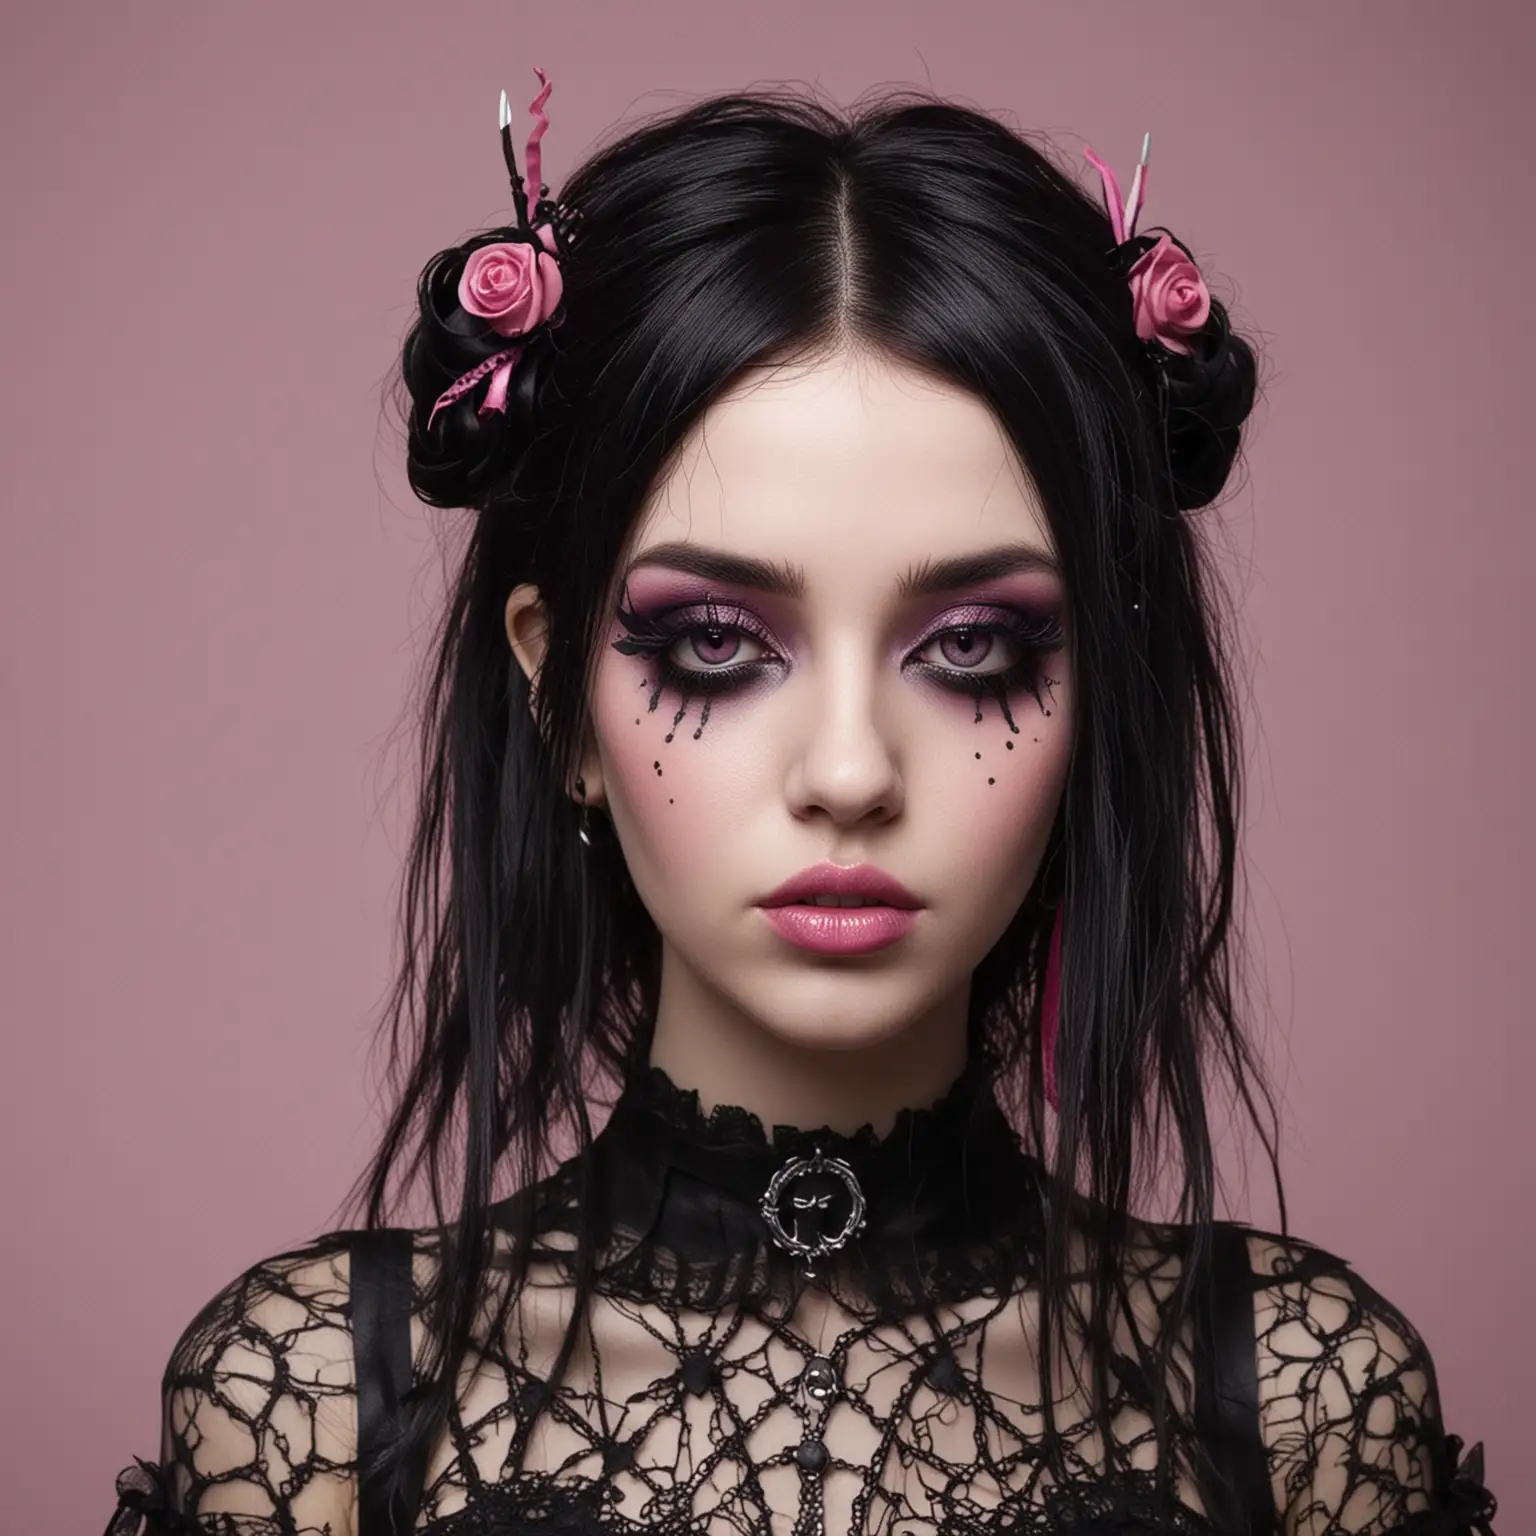 Goth Girl in Pinkthemed Setting